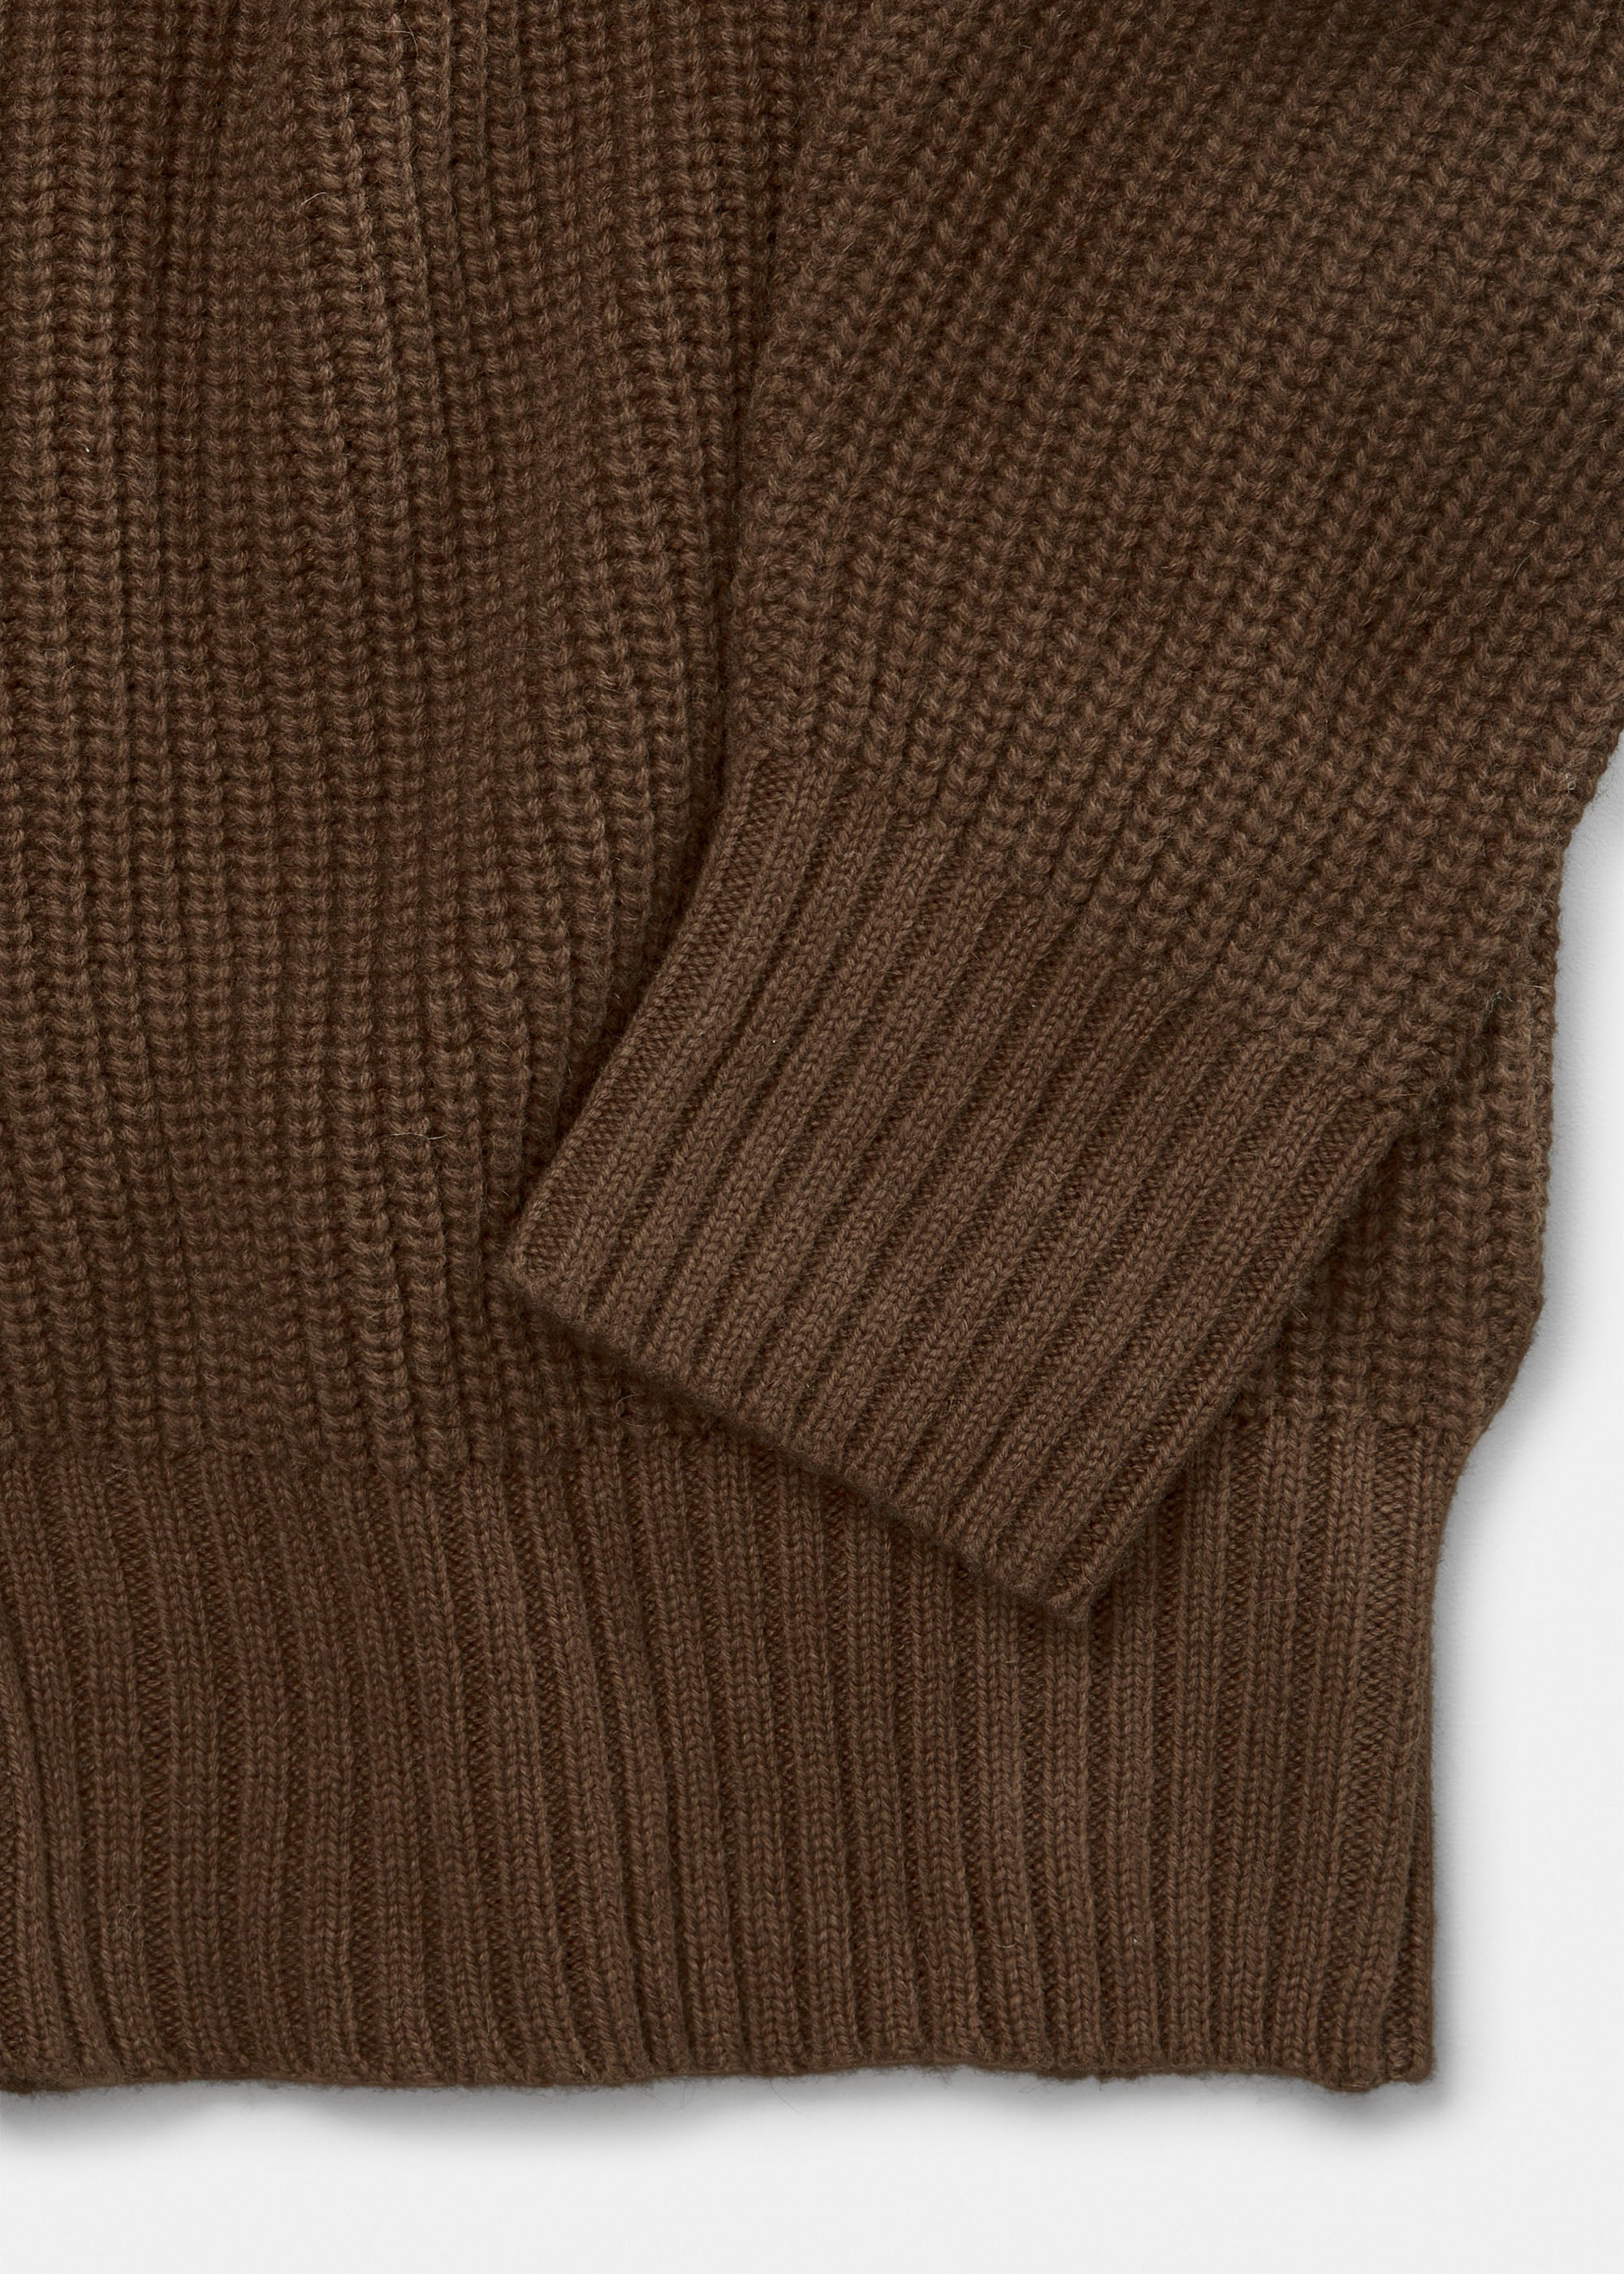 Hera wool sweater | Brown Sugar